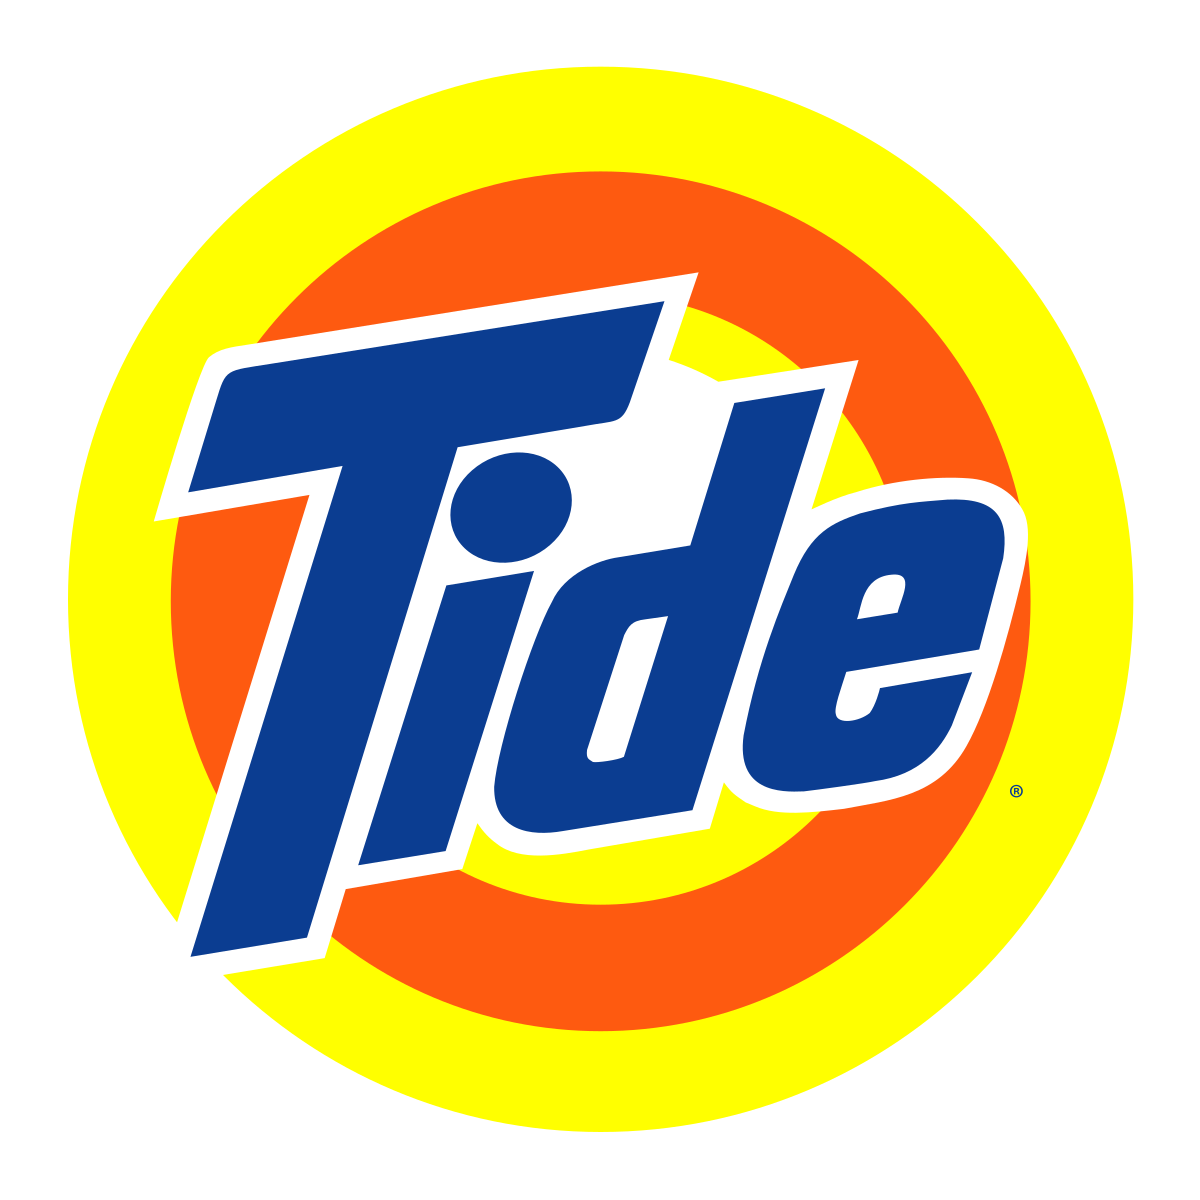 Download File:Tide logo.svg - Wikimedia Commons